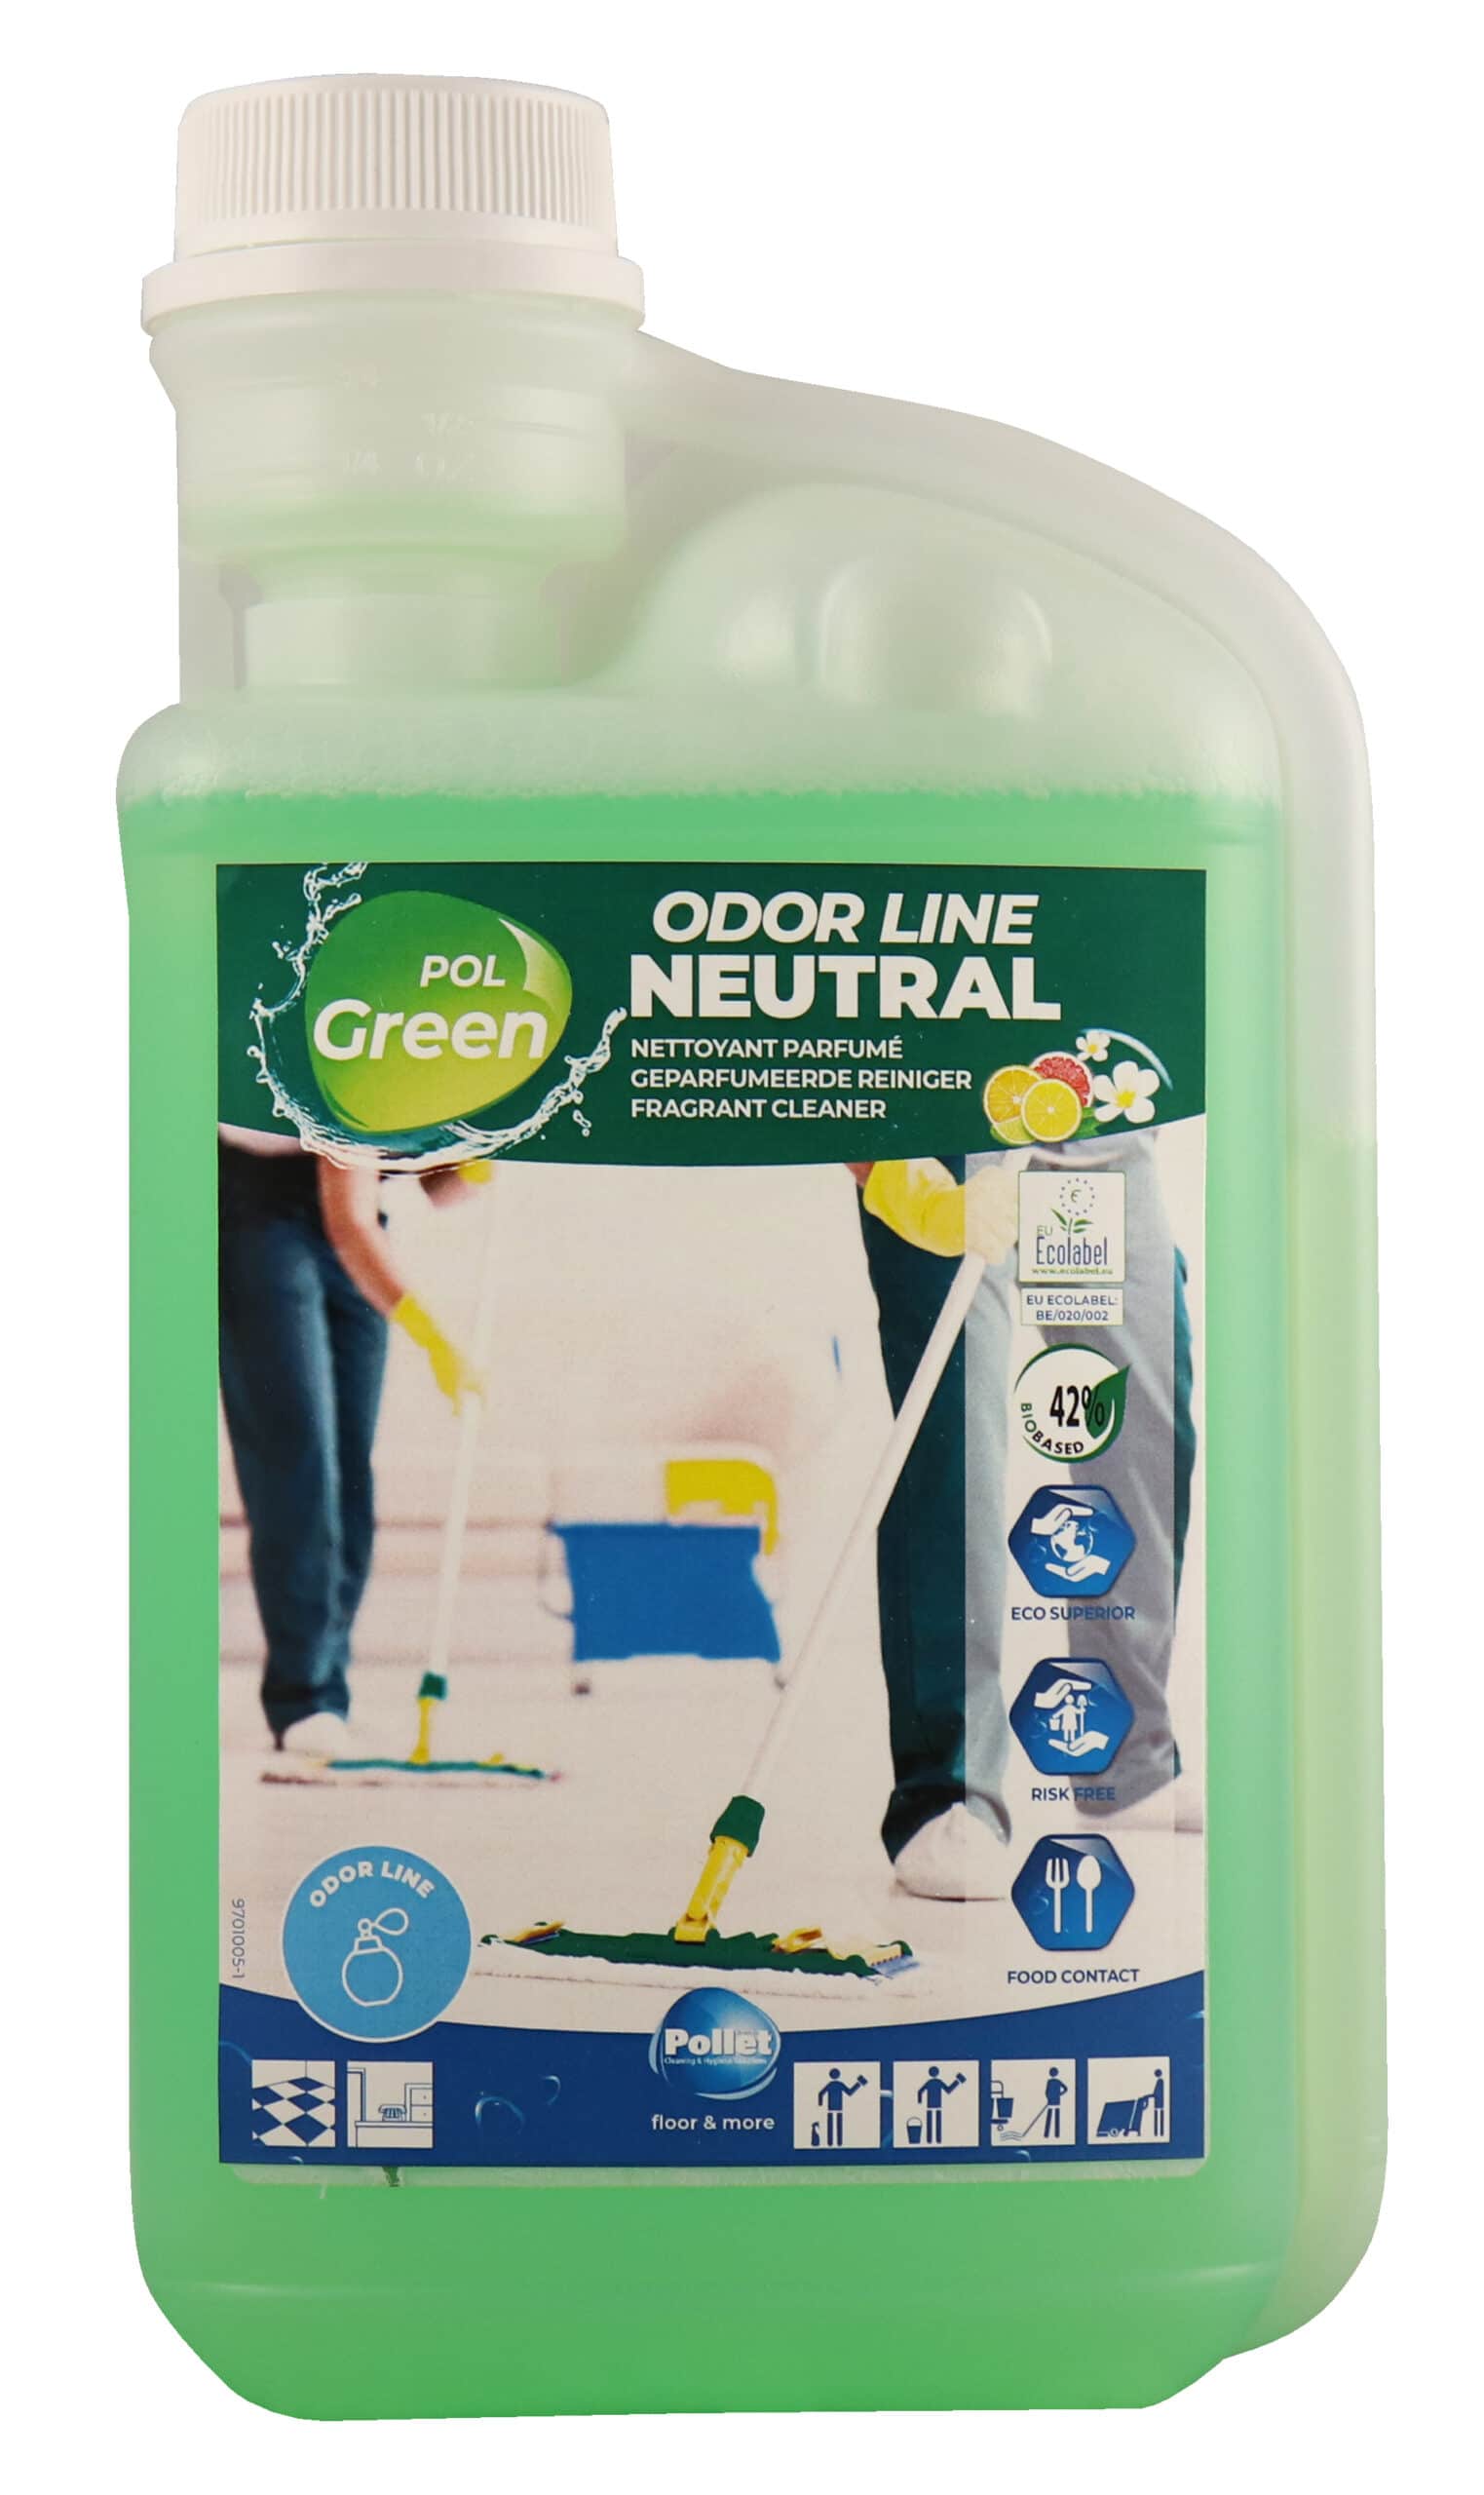 POLGREEN ODOR LINE NEUTRAL Detergent ecologic parfumat 1L